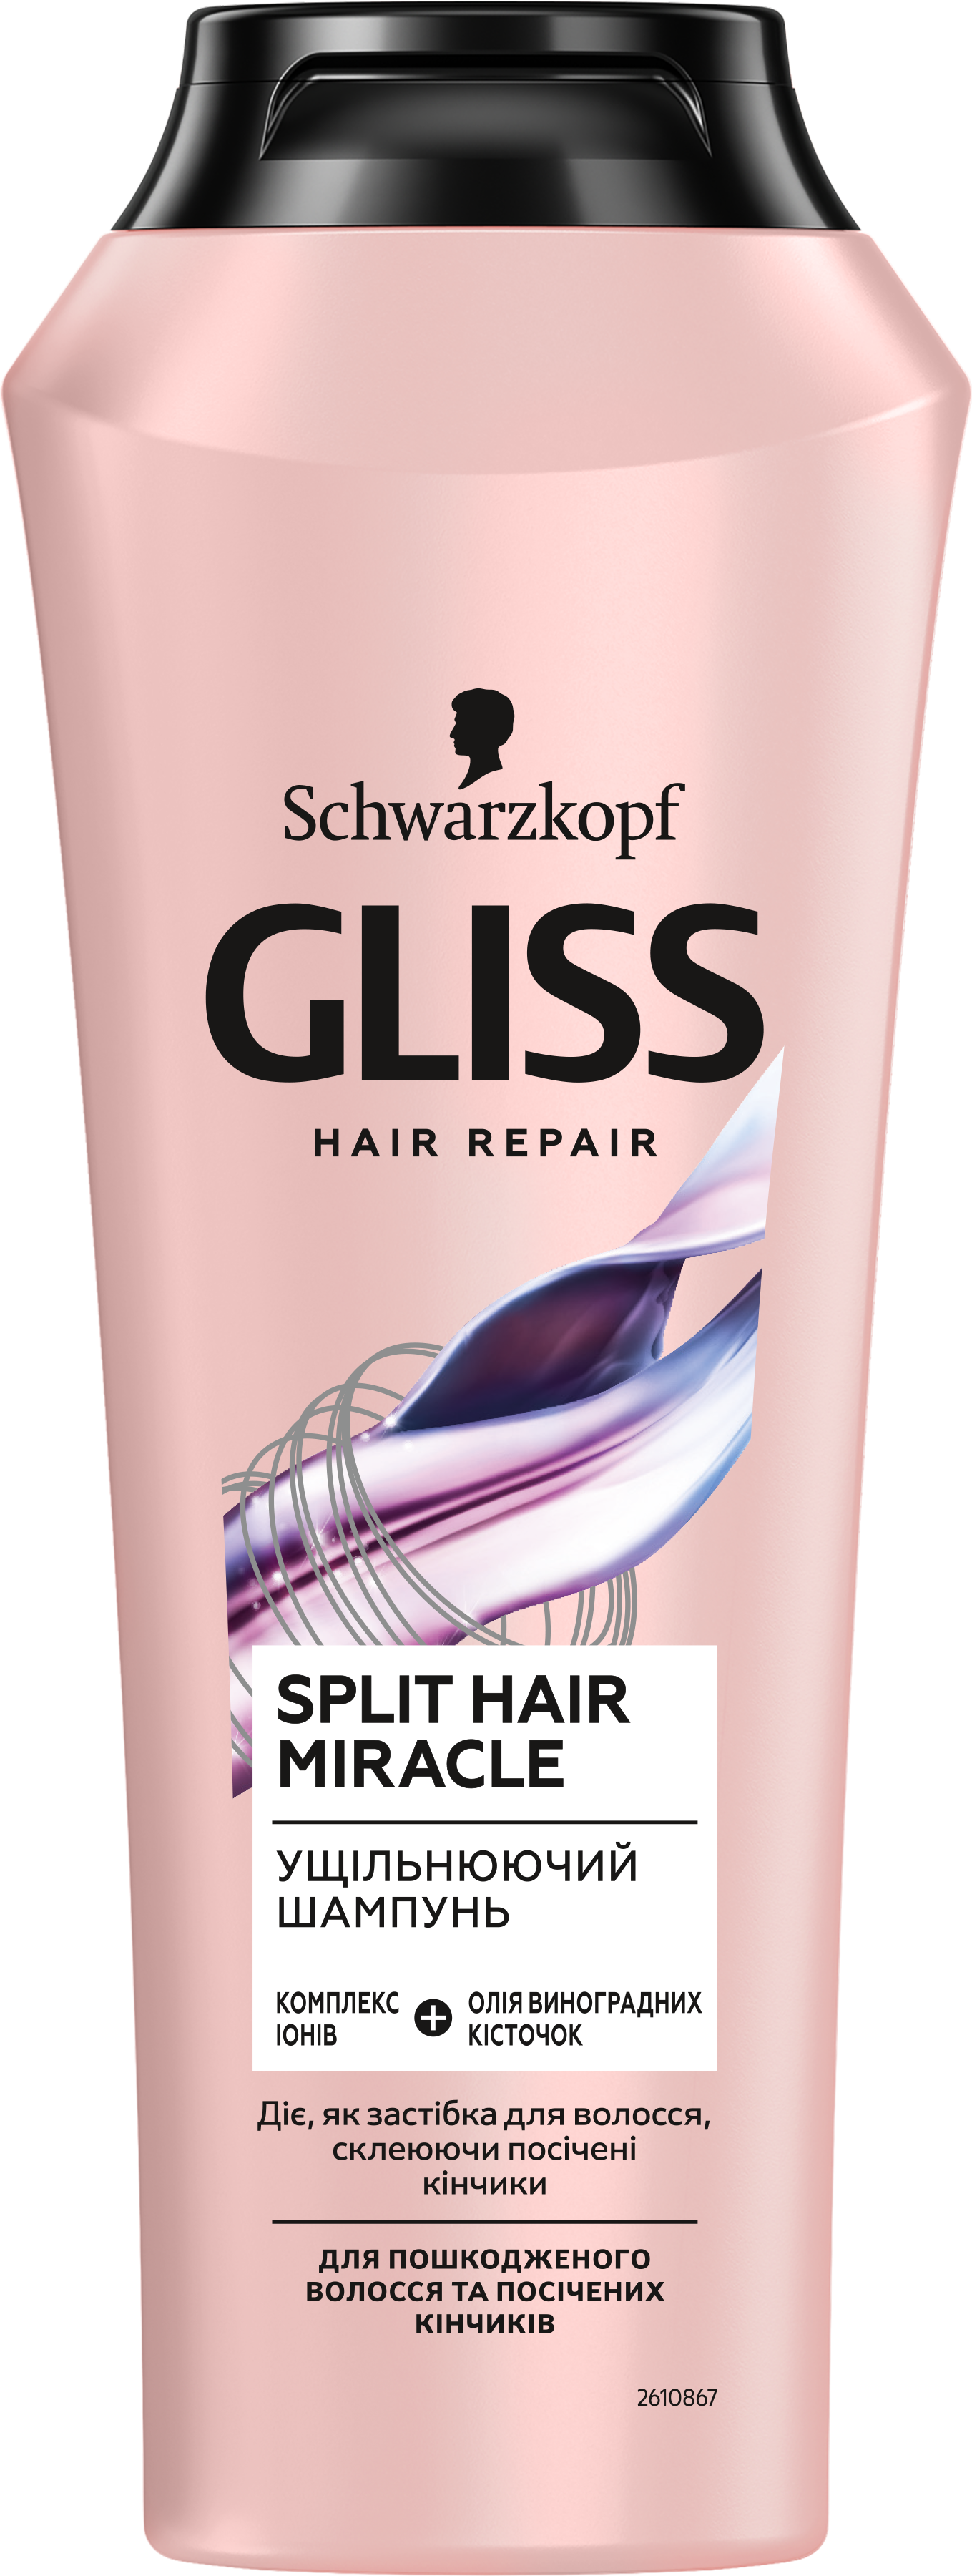 Подарунковий набір Gliss Split Hair Miracle: Шампунь, 250 мл + Бальзам, 200 мл - фото 6